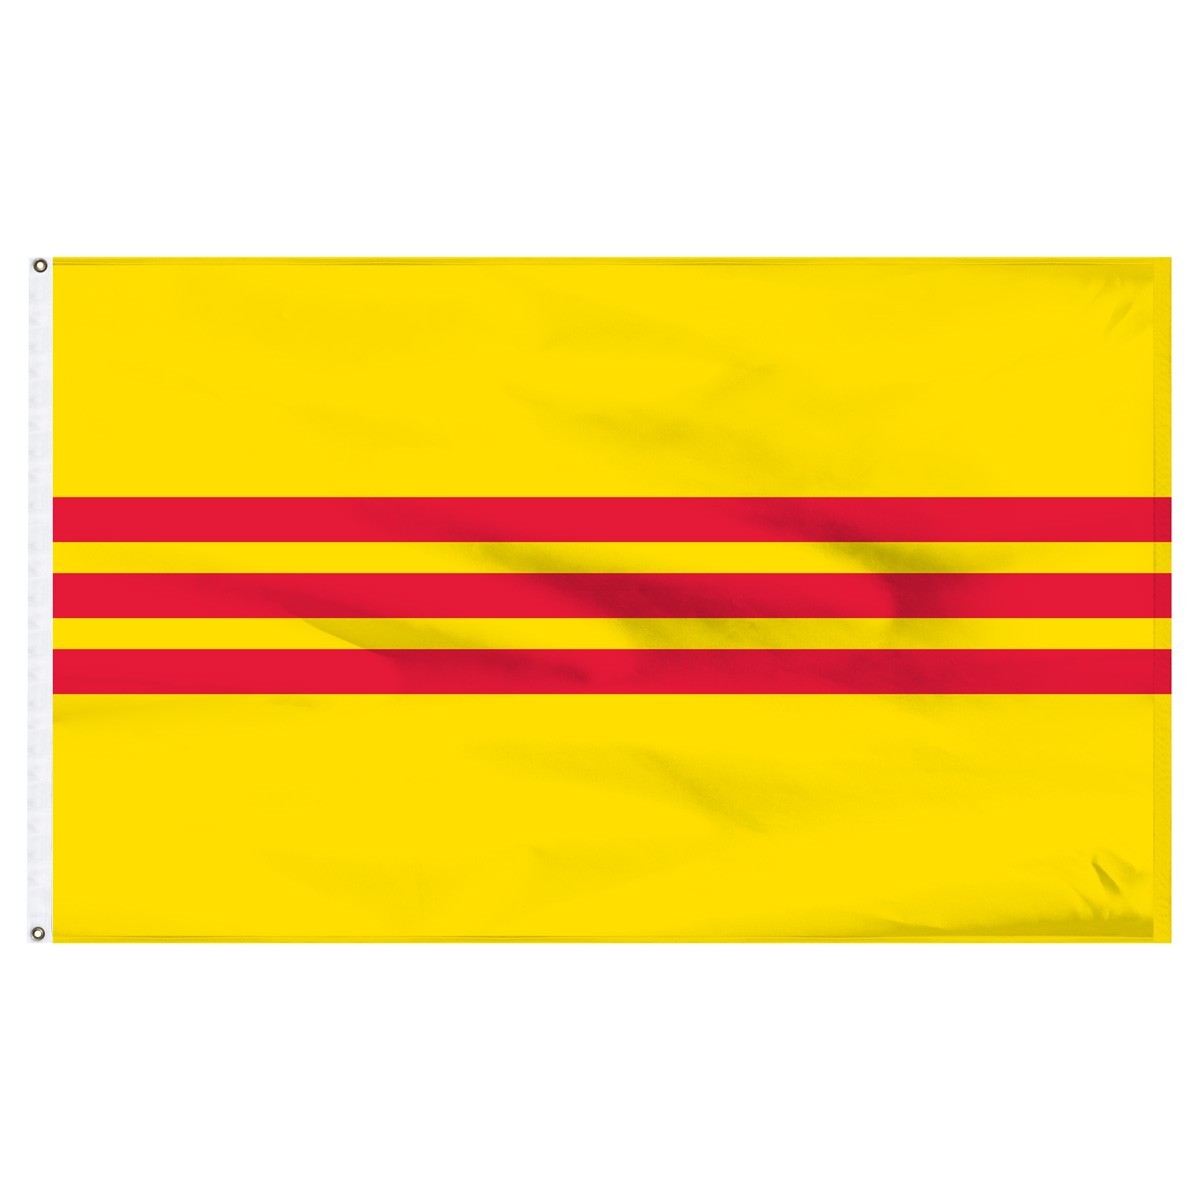 Bandera de nailon para exteriores de Vietnam del Sur, 5 pies x 8 pies